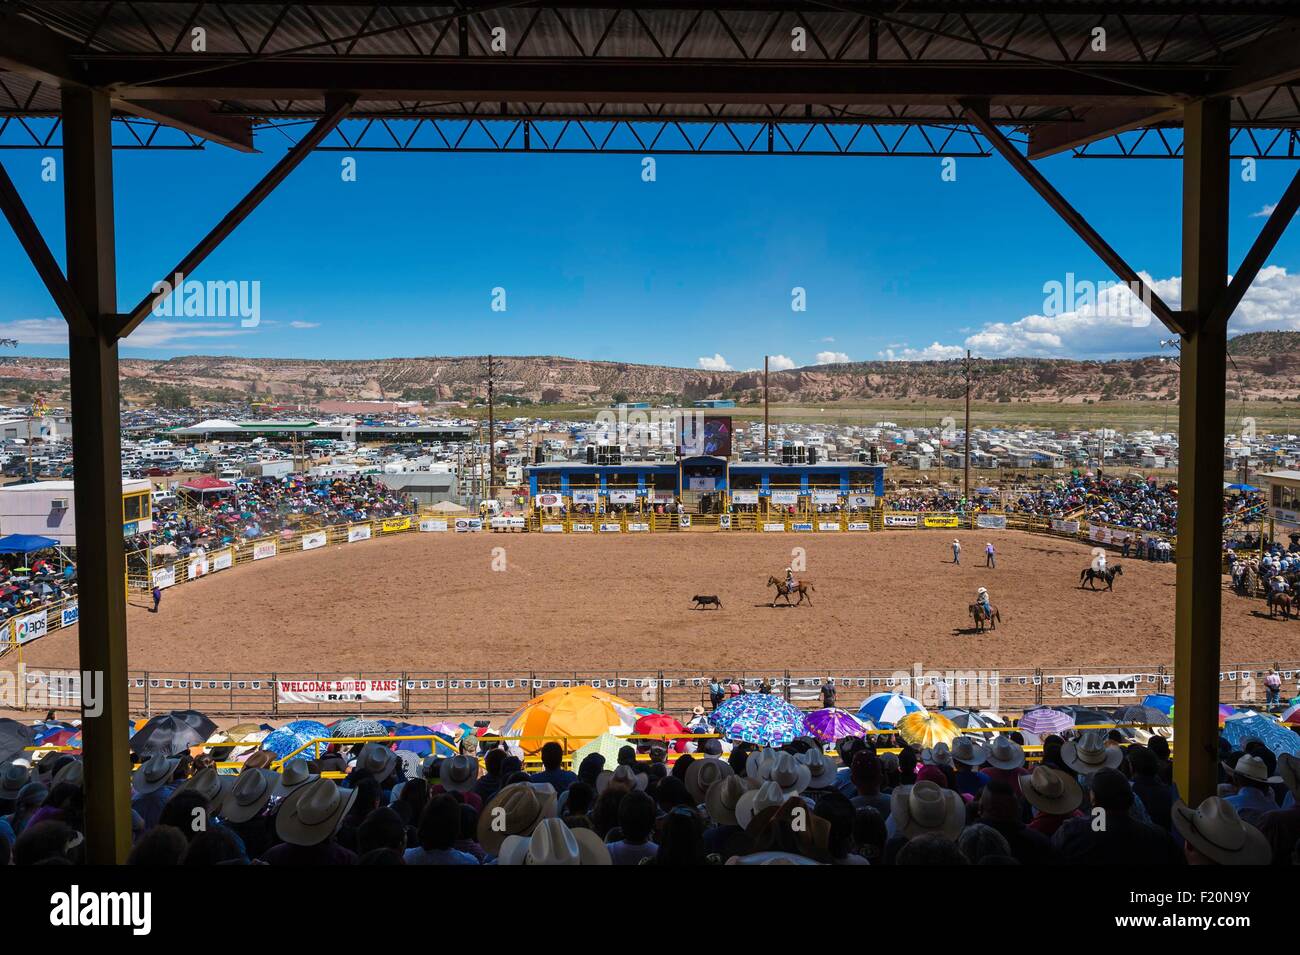 United States, Arizona, Window Rock, Festival Navajo Nation Fair, rodeo